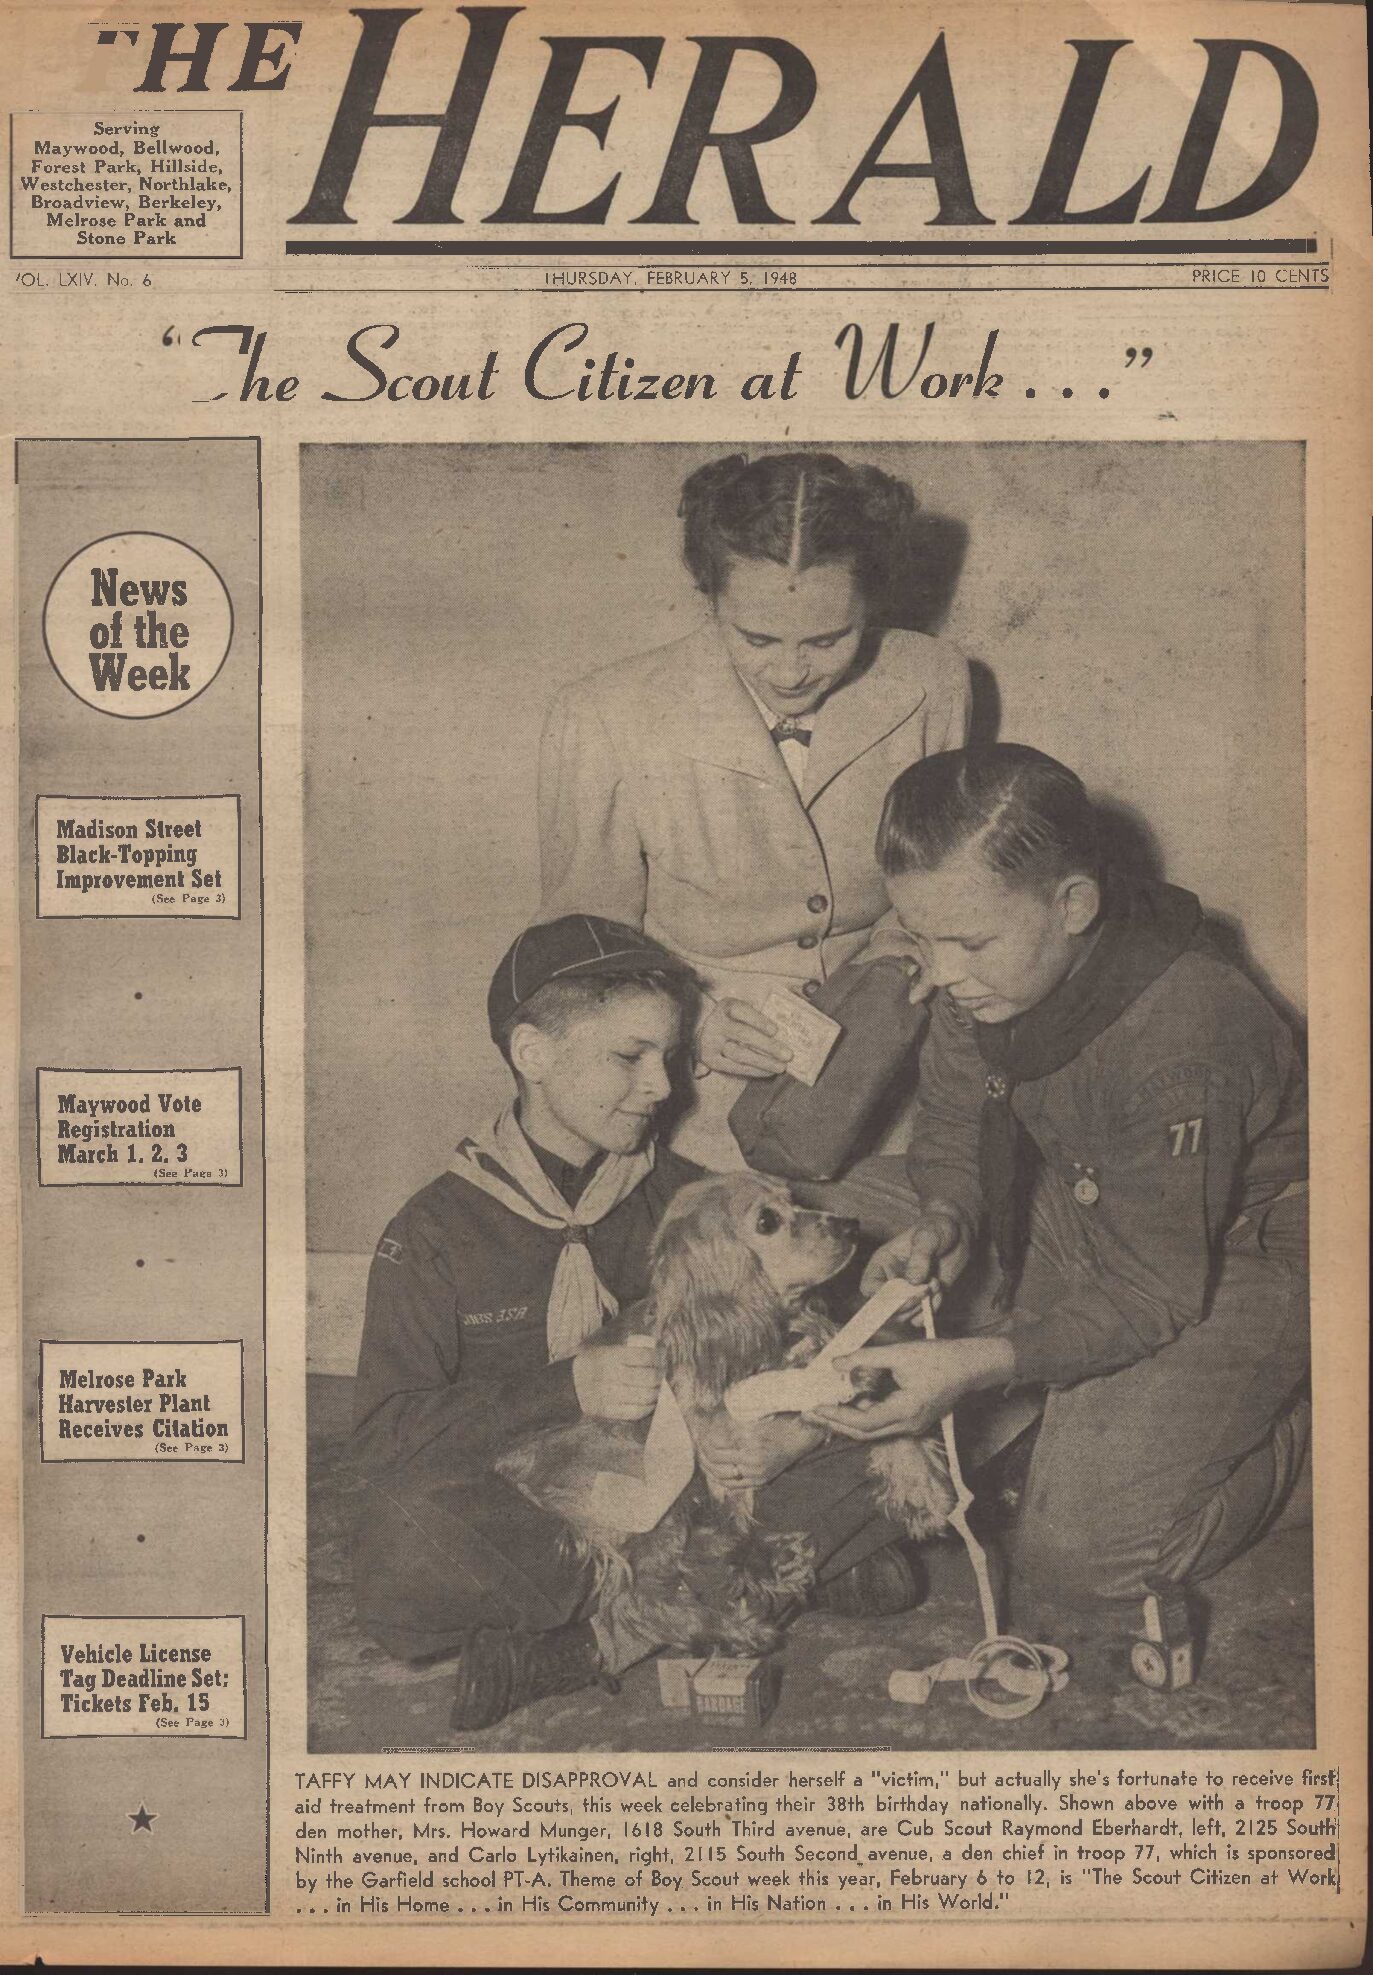 The Herald – 19480205